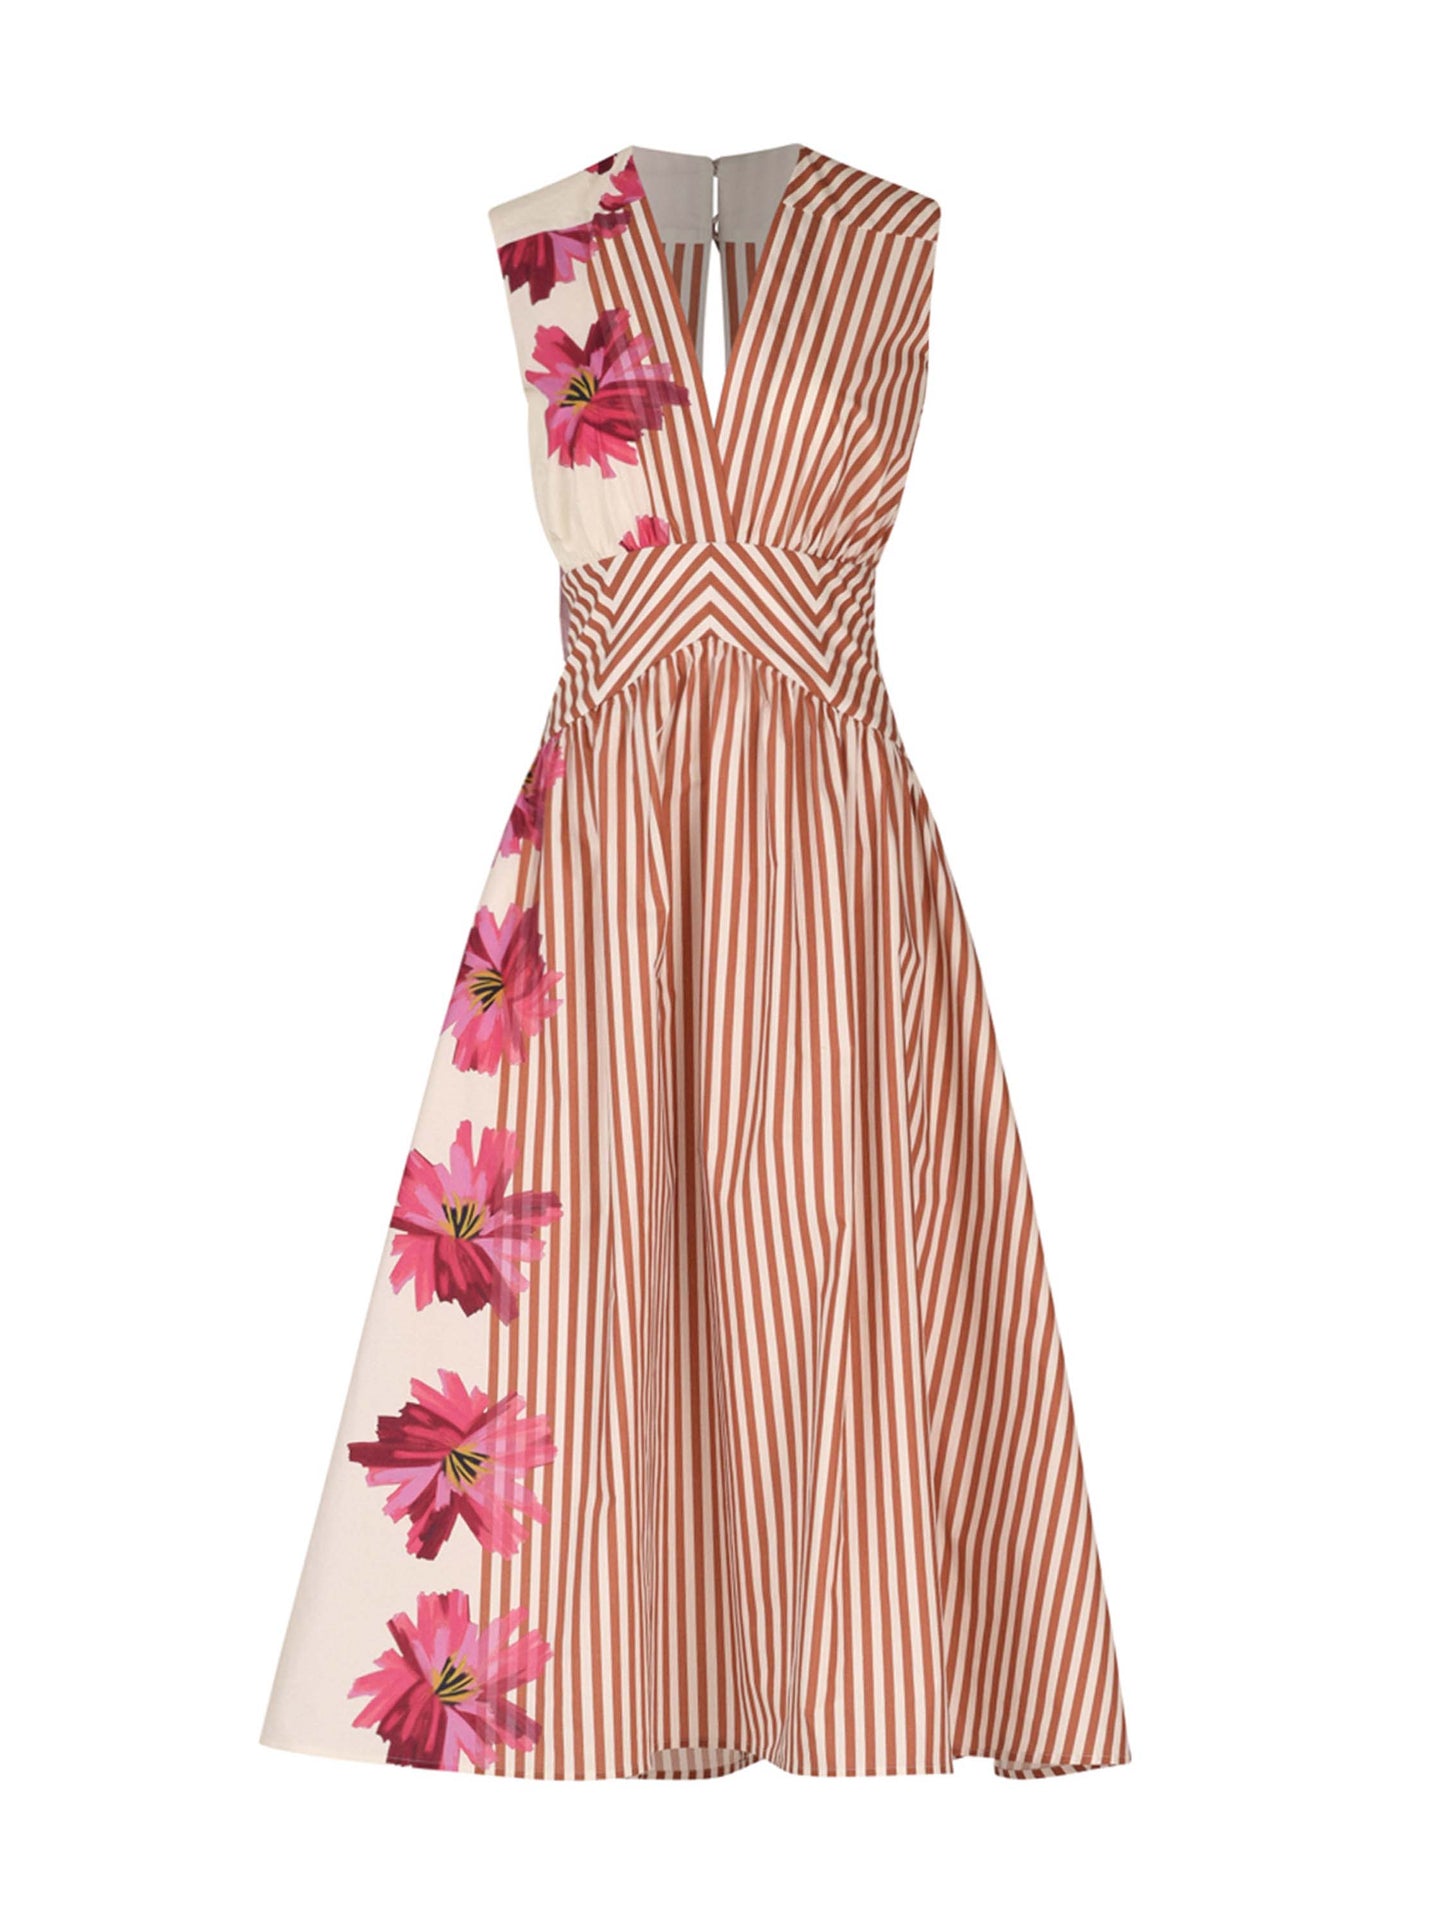 A Jocelyn Dress Magenta Floral Brushstroke Stripes with a v-neckline, featuring vertical red stripes and scattered pink floral designs, displayed on a hanger against a white background.